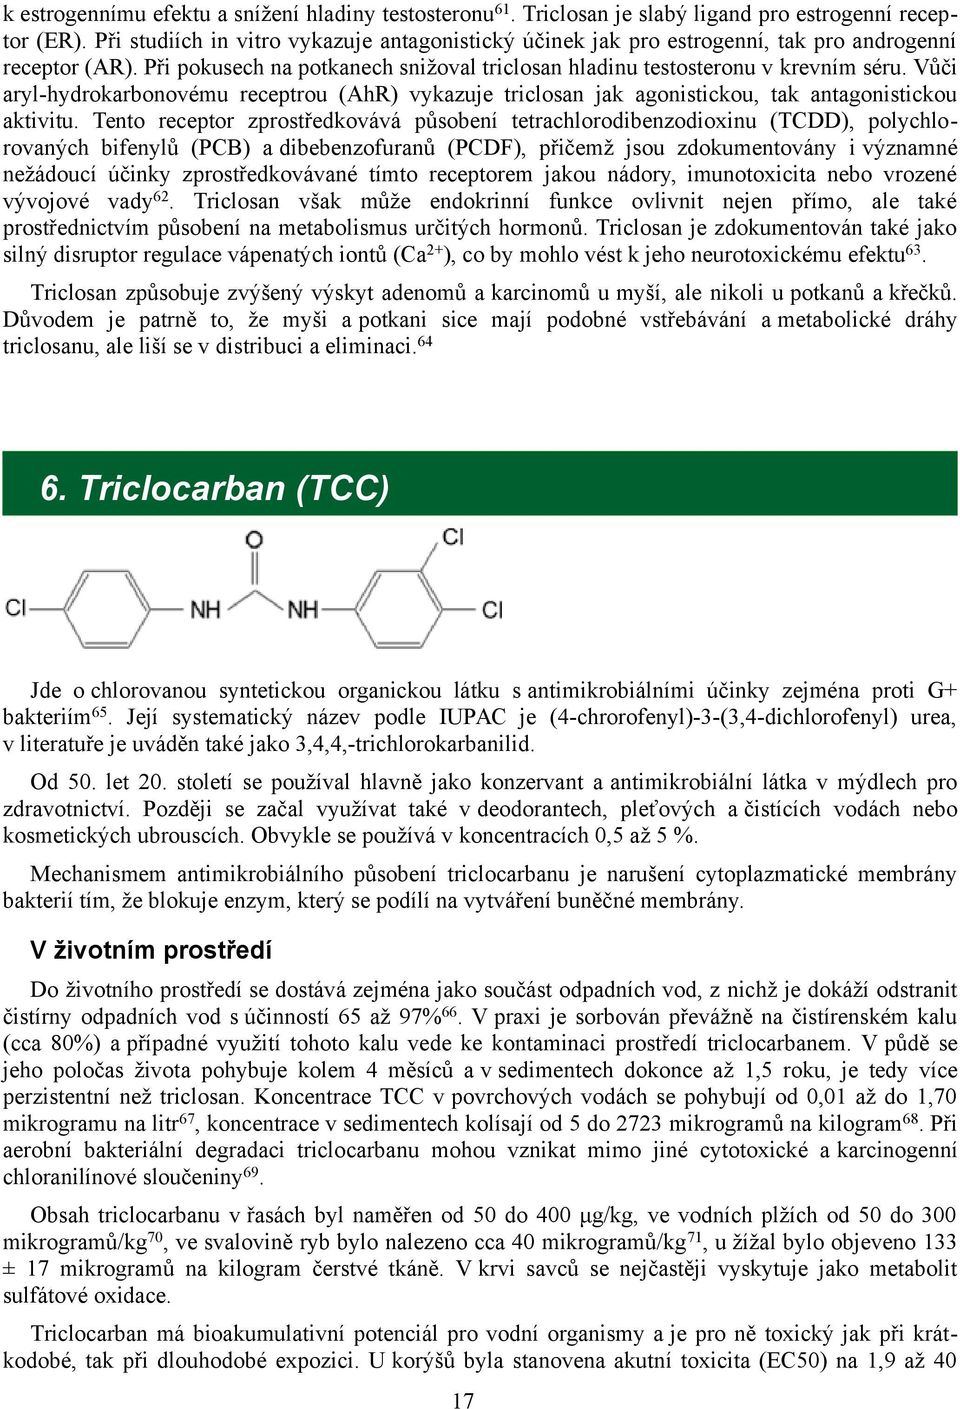 Vůči aryl-hydrokarbonovému receptrou (AhR) vykazuje triclosan jak agonistickou, tak antagonistickou aktivitu.